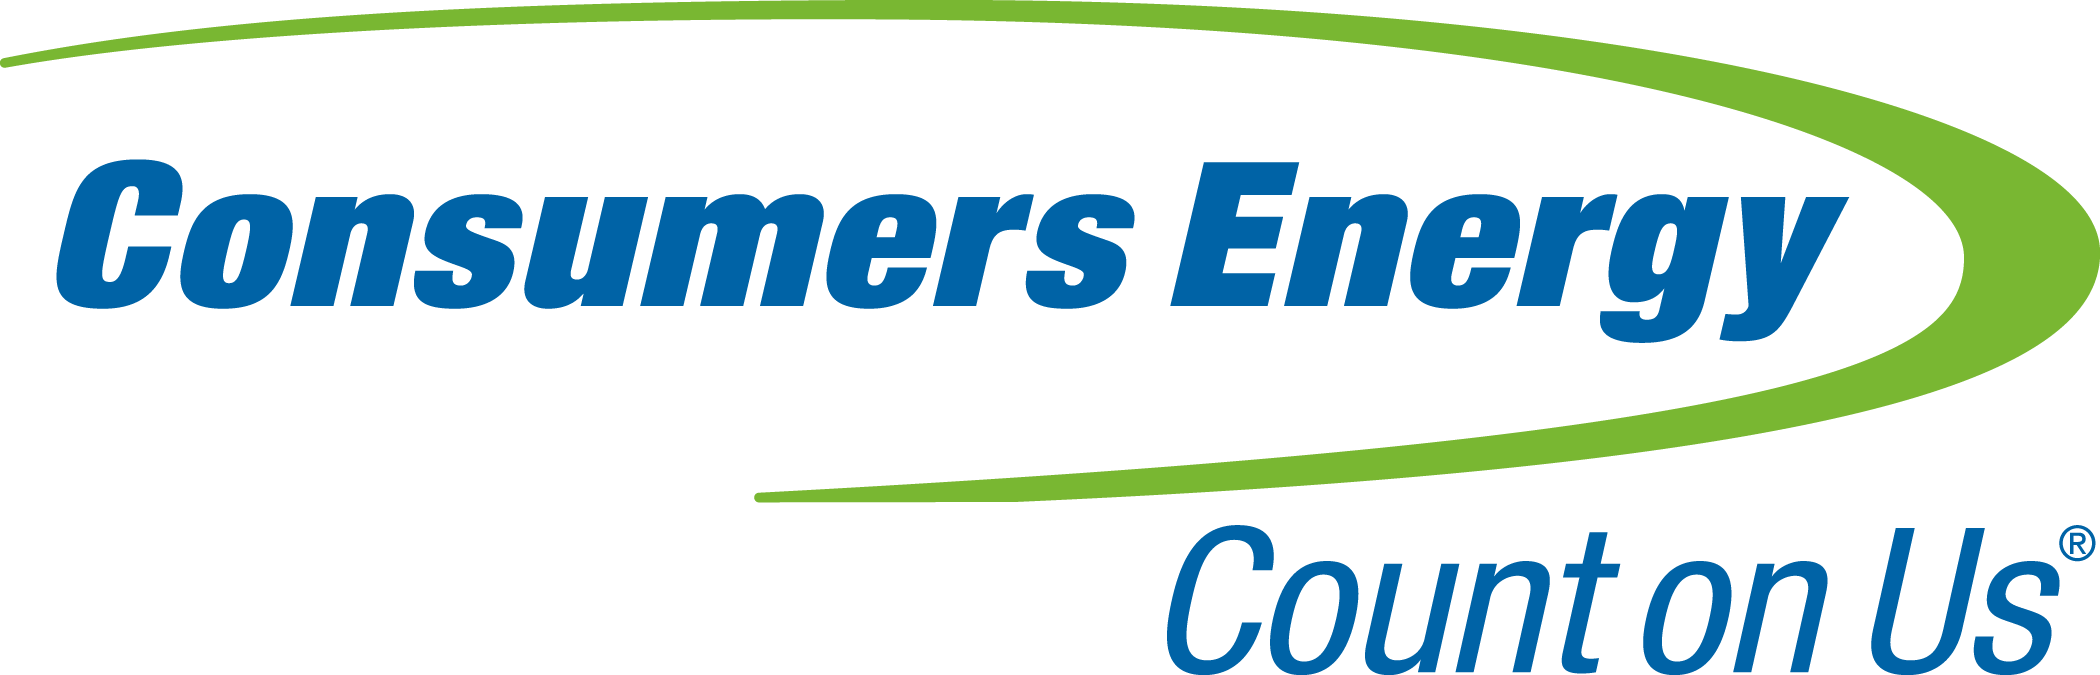 Consumers Energy Gas Oil Utilities Sales Training